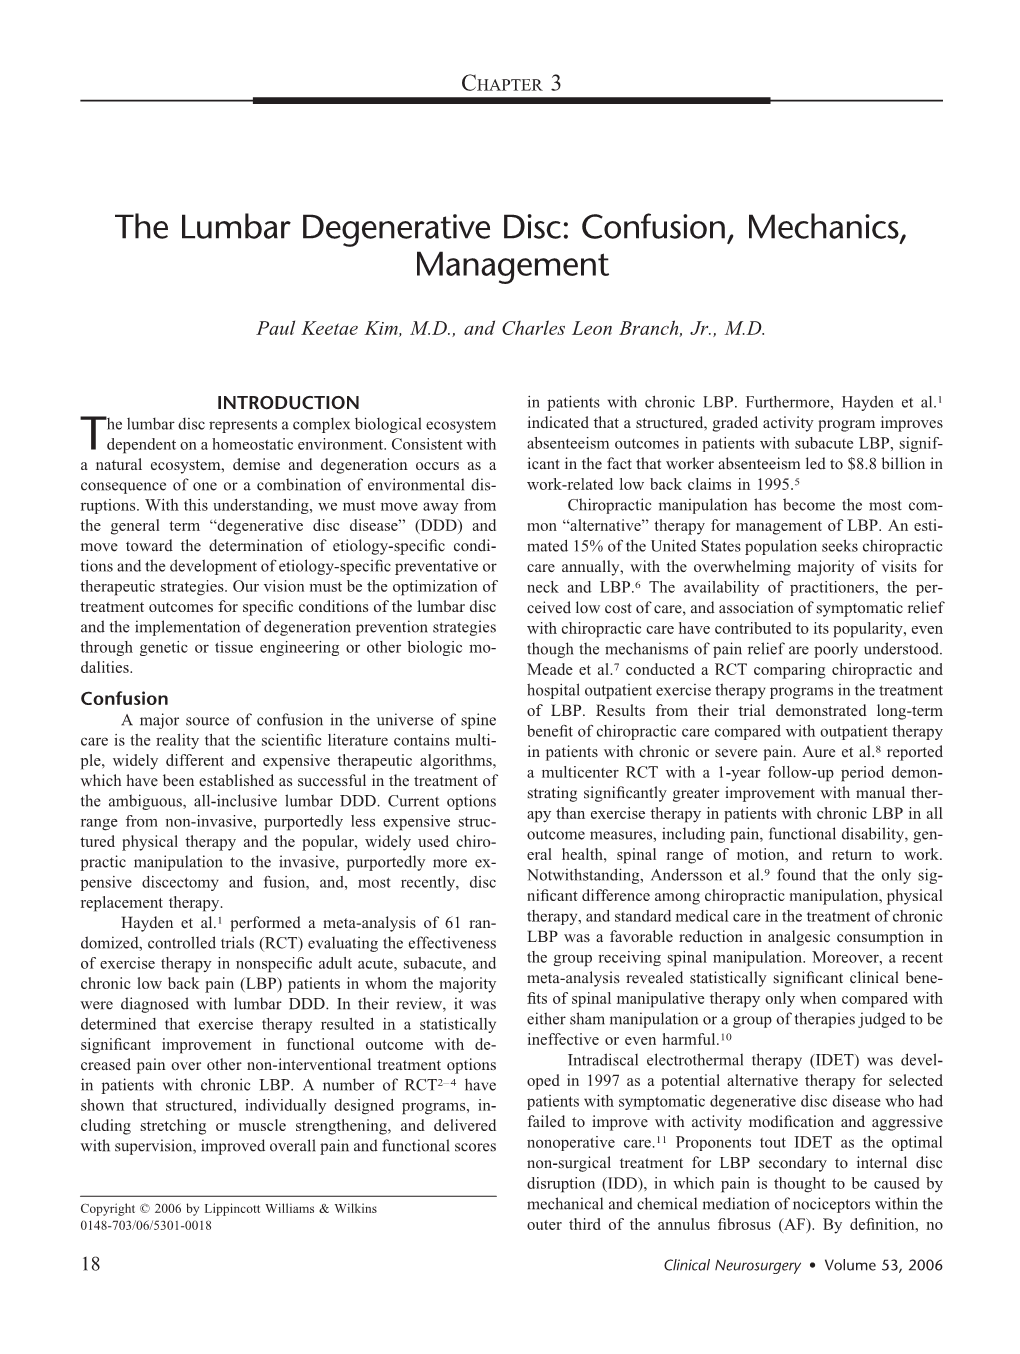 The Lumbar Degenerative Disc: Confusion, Mechanics, Management